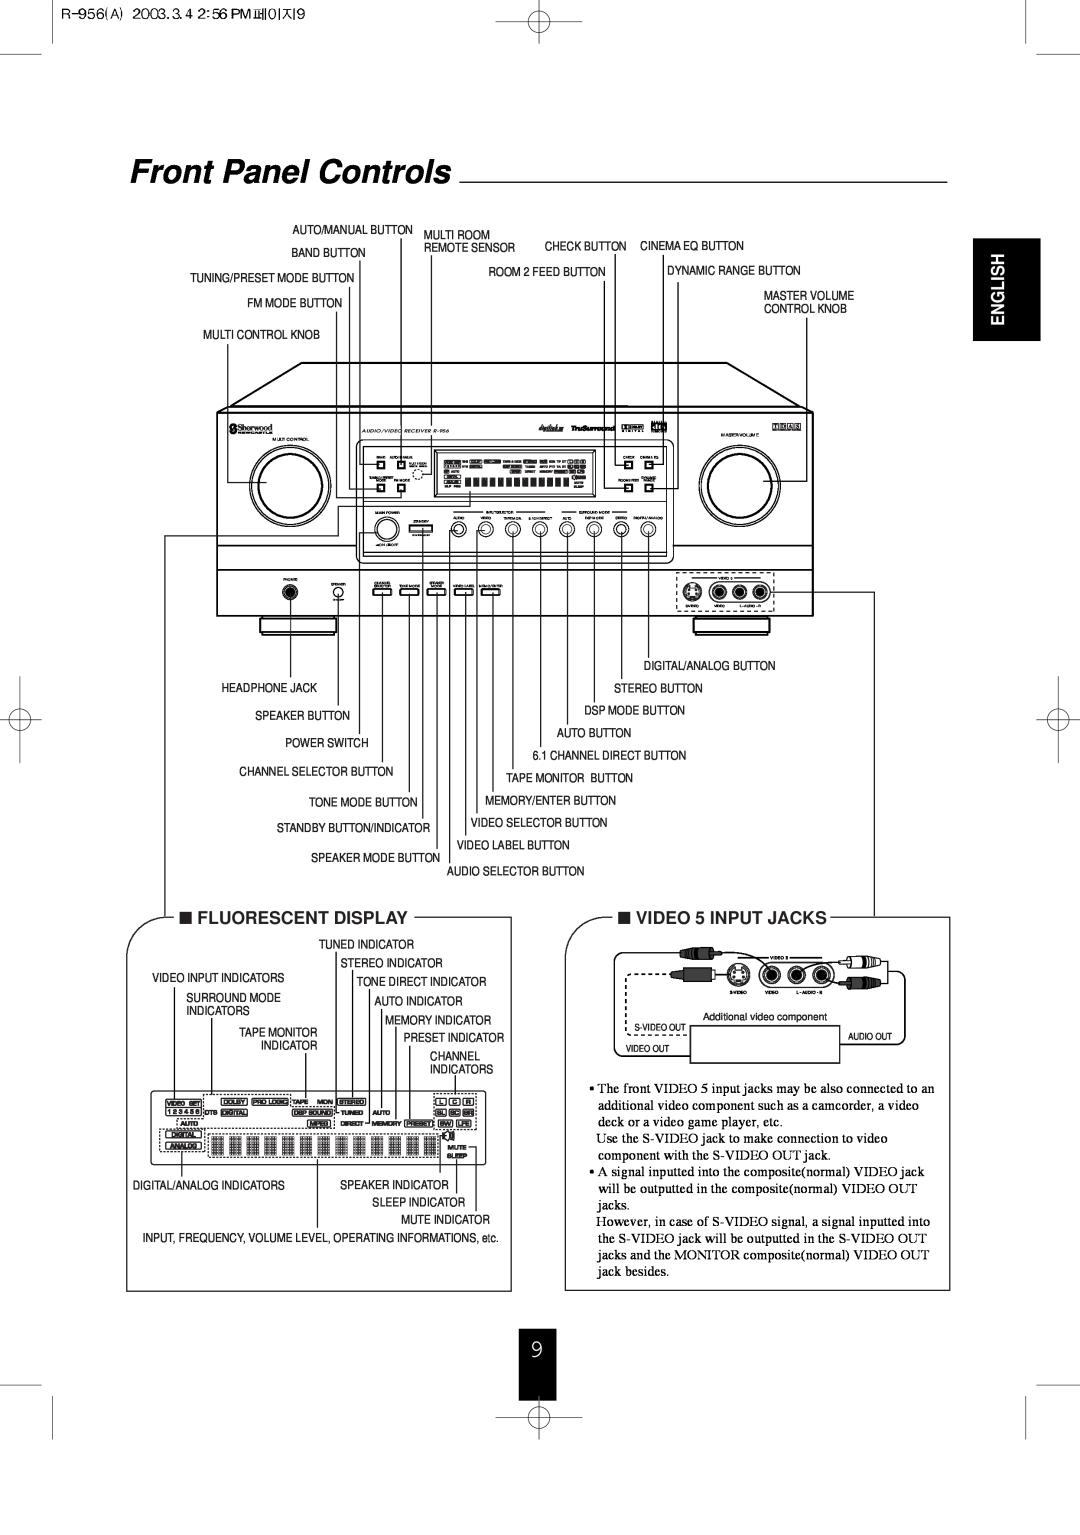 Sherwood R-956 manual Front Panel Controls, Fluorescent Display, VIDEO 5 INPUT JACKS, English 